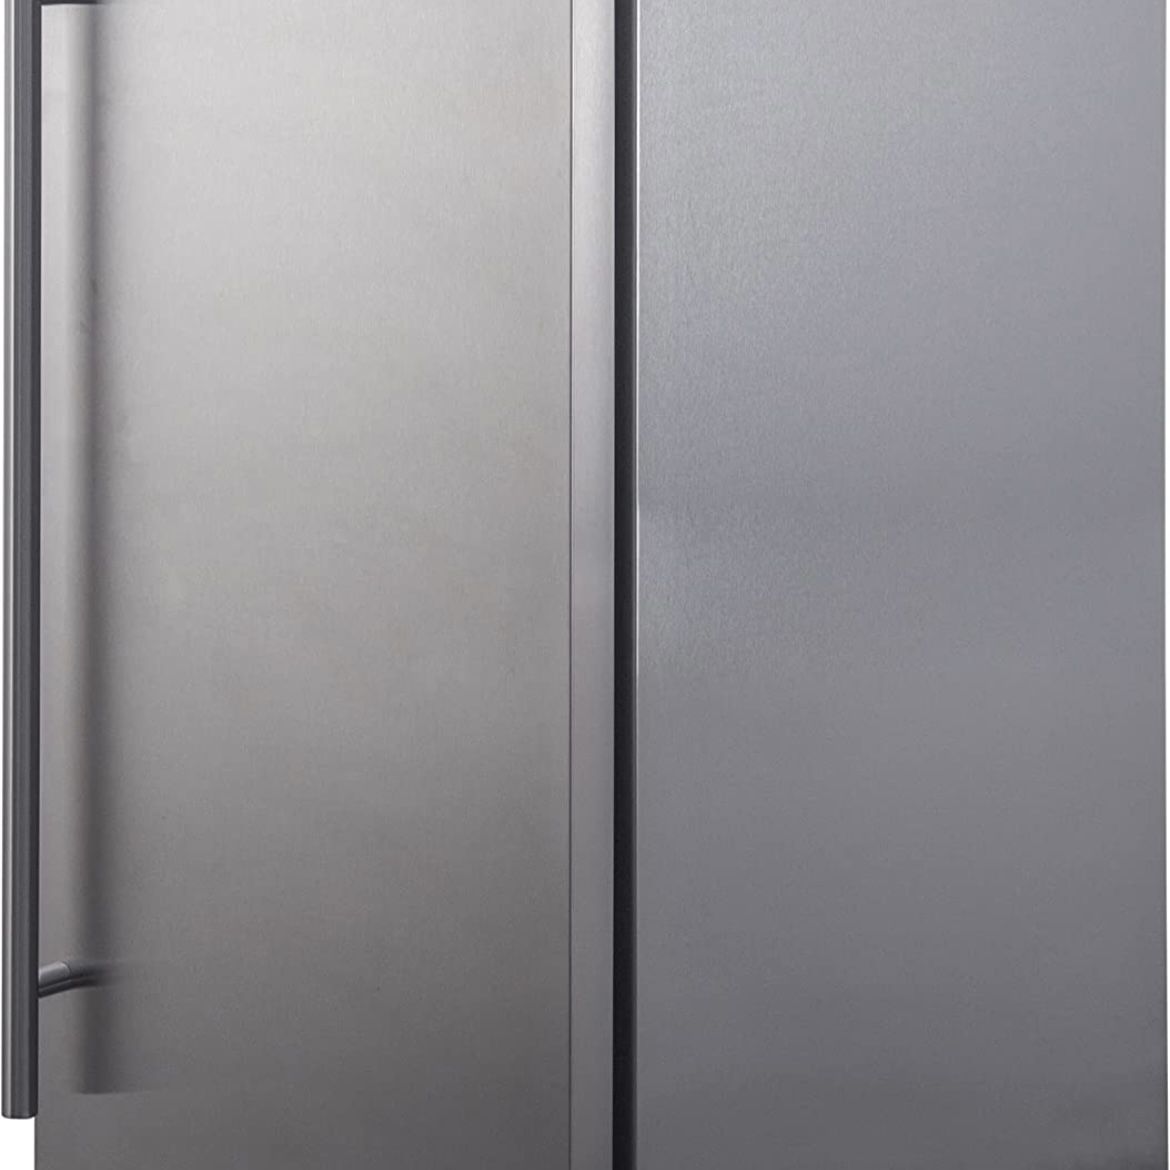 26-86 Outdoor Beverage Refrigerator 